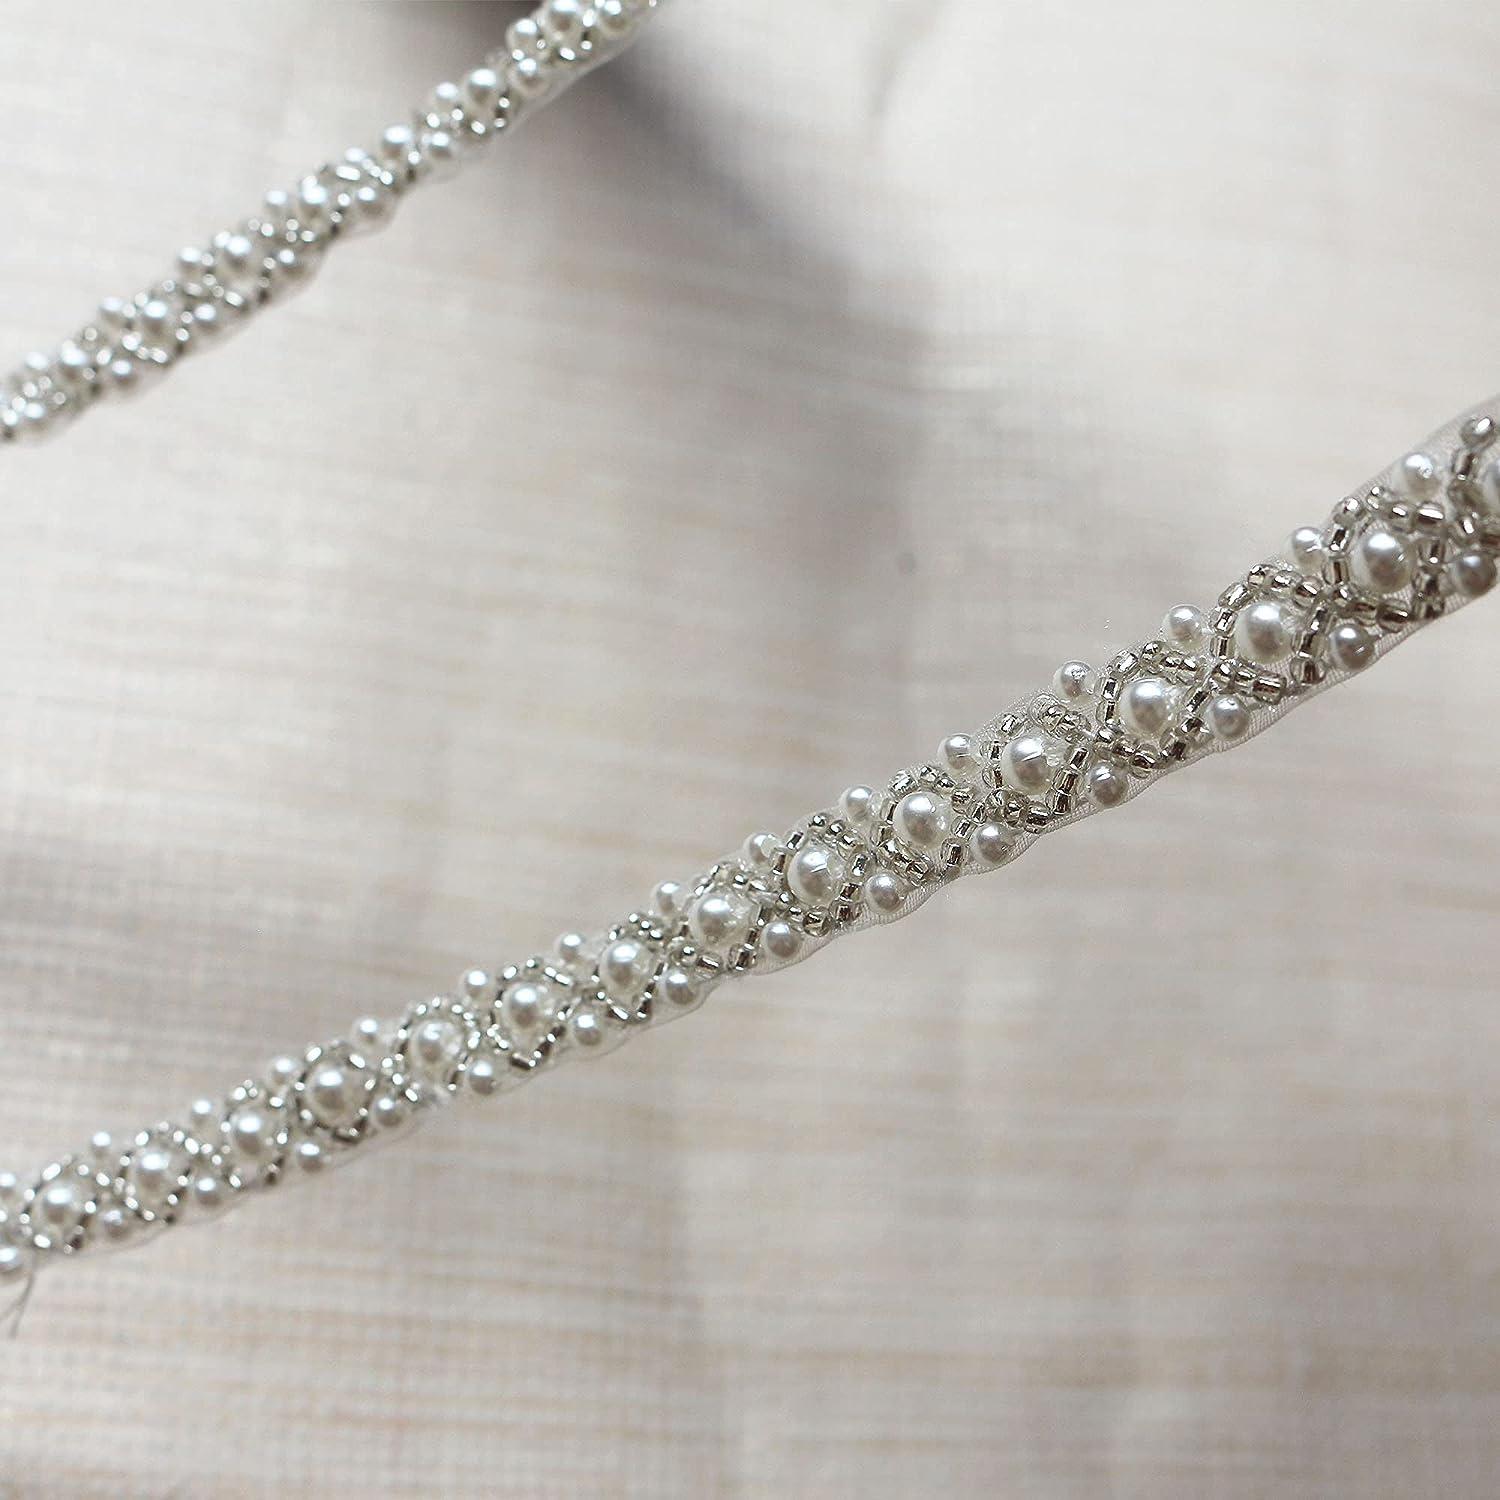 Little PanDaDa 2 Yards Pearl Beaded Trim Bridal Lace Ribbon Trimming Edge for DIY Craft Sewing on Costume Bridal Dress Decor 1cm (ivory)